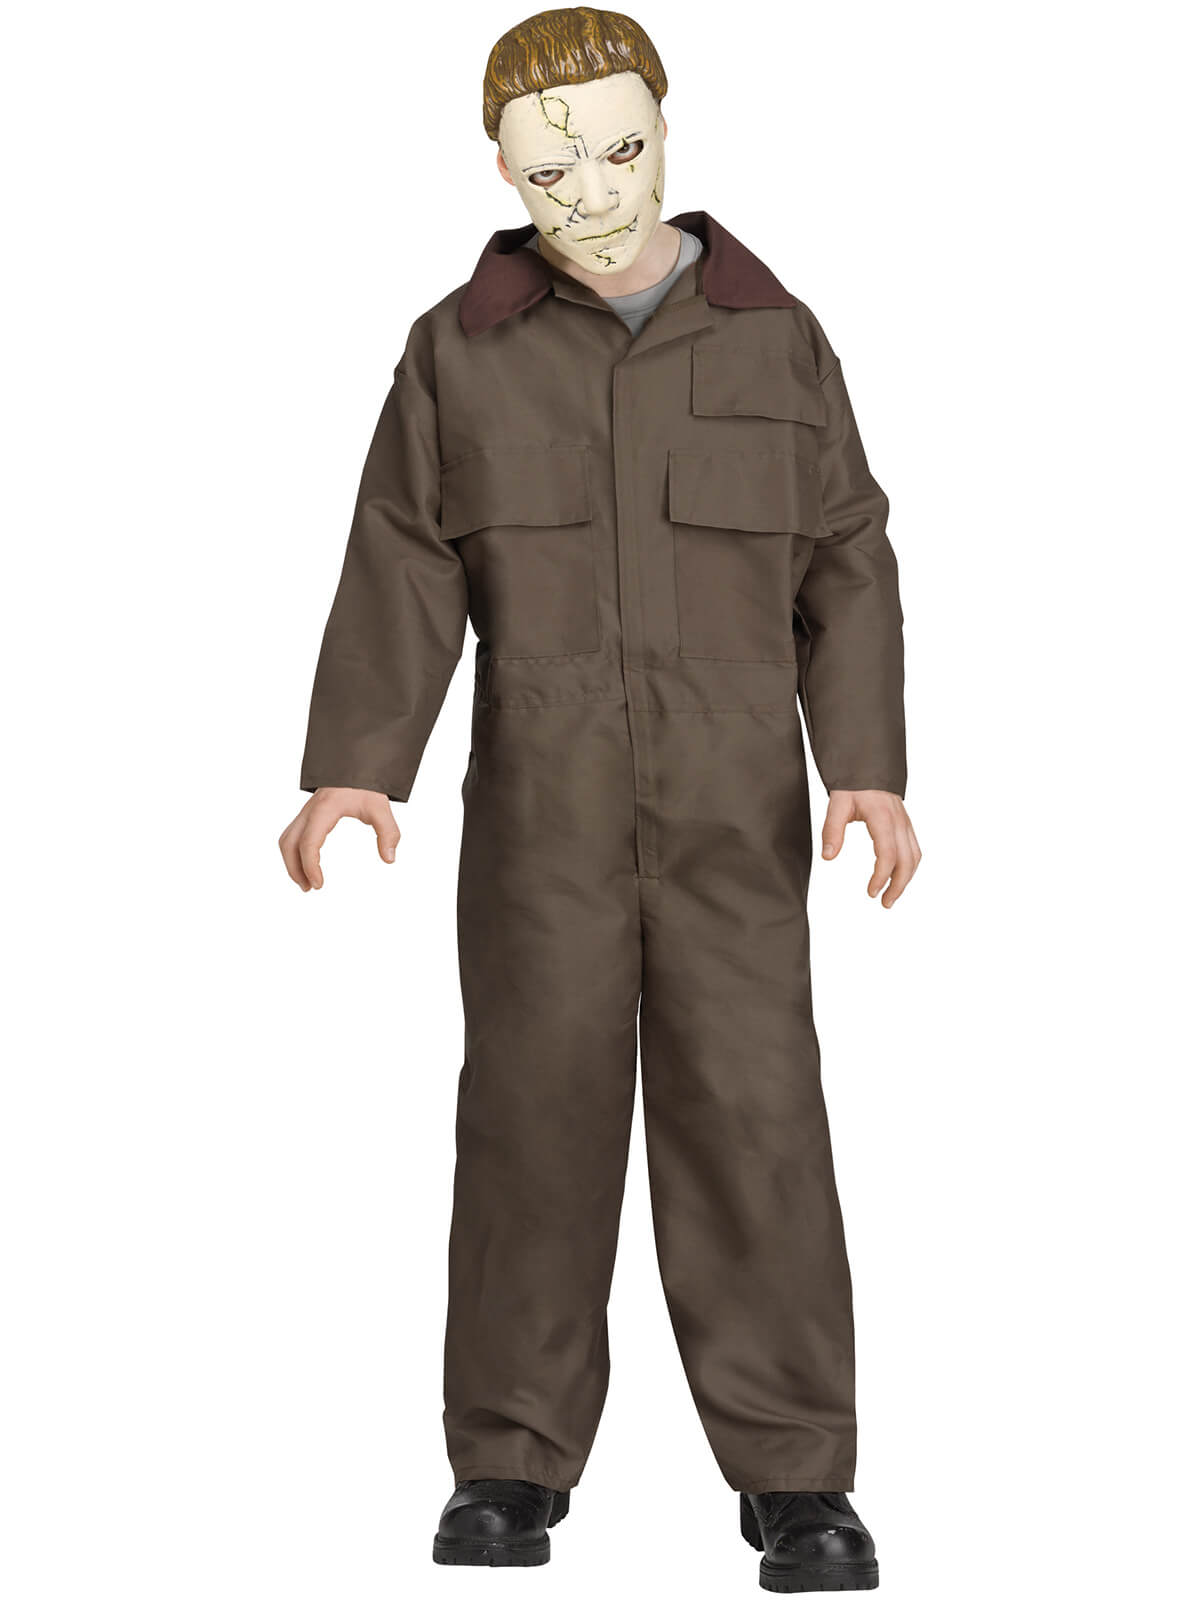 Michael Myers RZ Child Costume